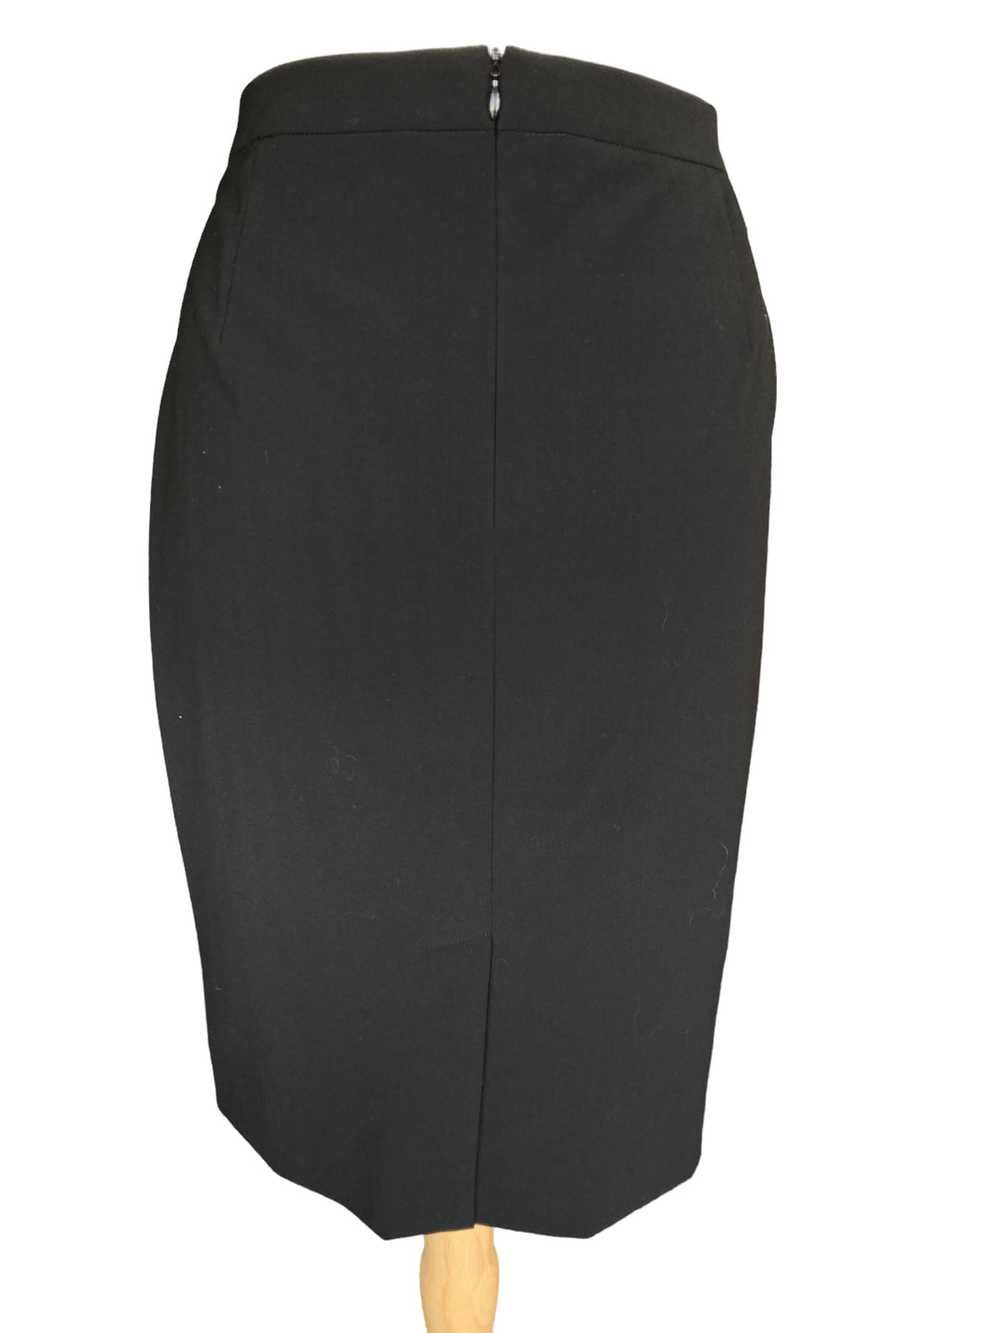 Wolford Black Pencil Skirt, M - image 2